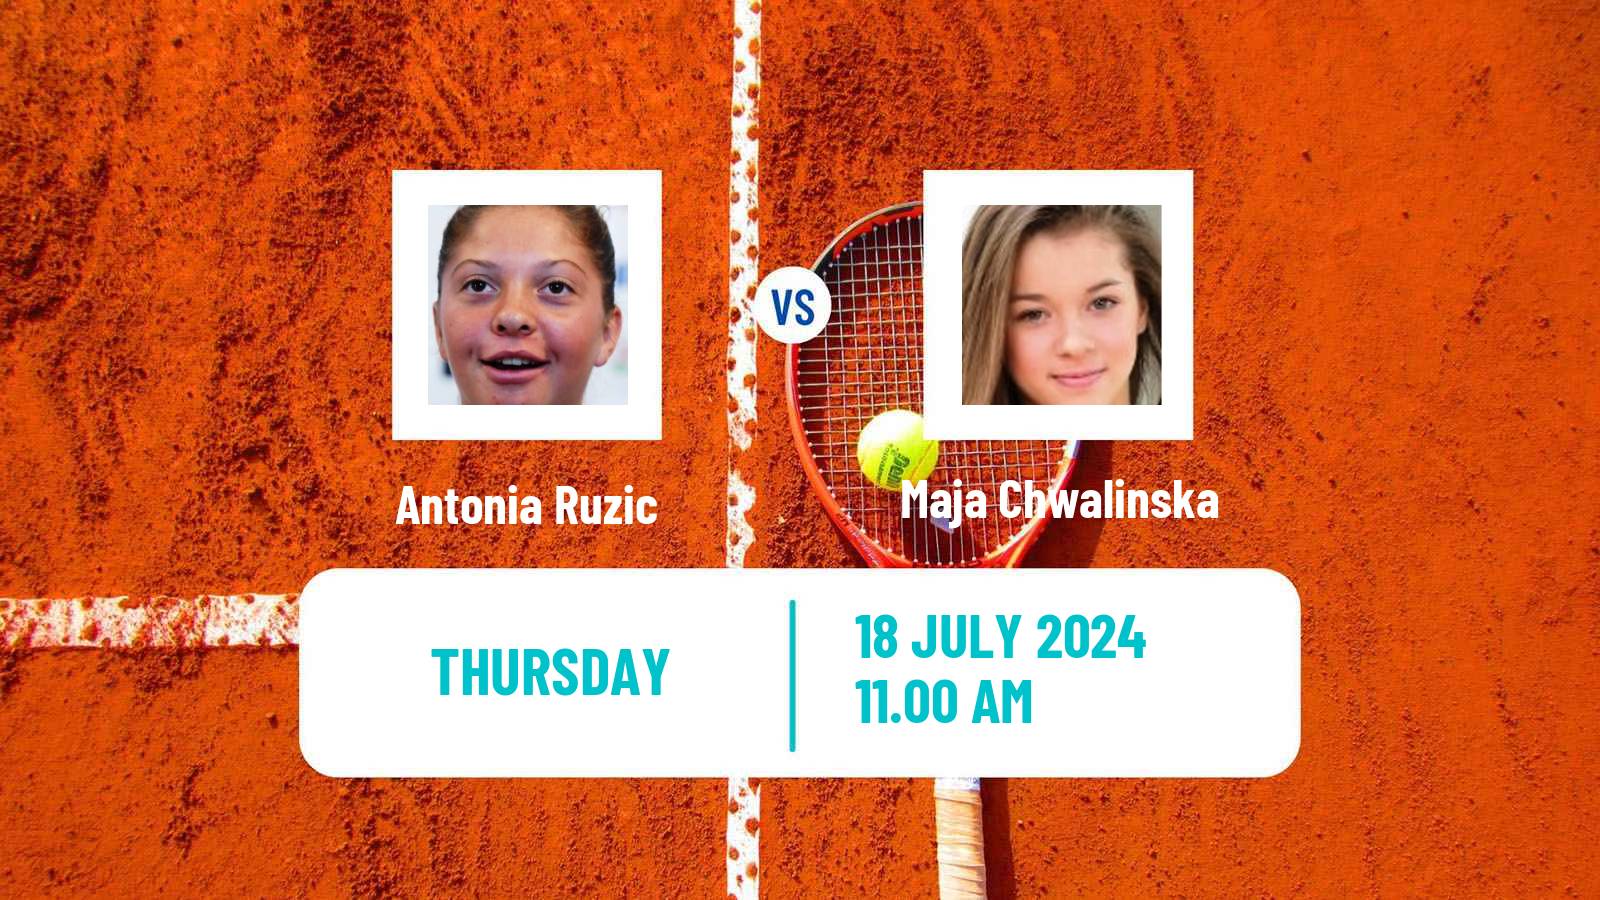 Tennis ITF W75 Porto 2 Women Antonia Ruzic - Maja Chwalinska